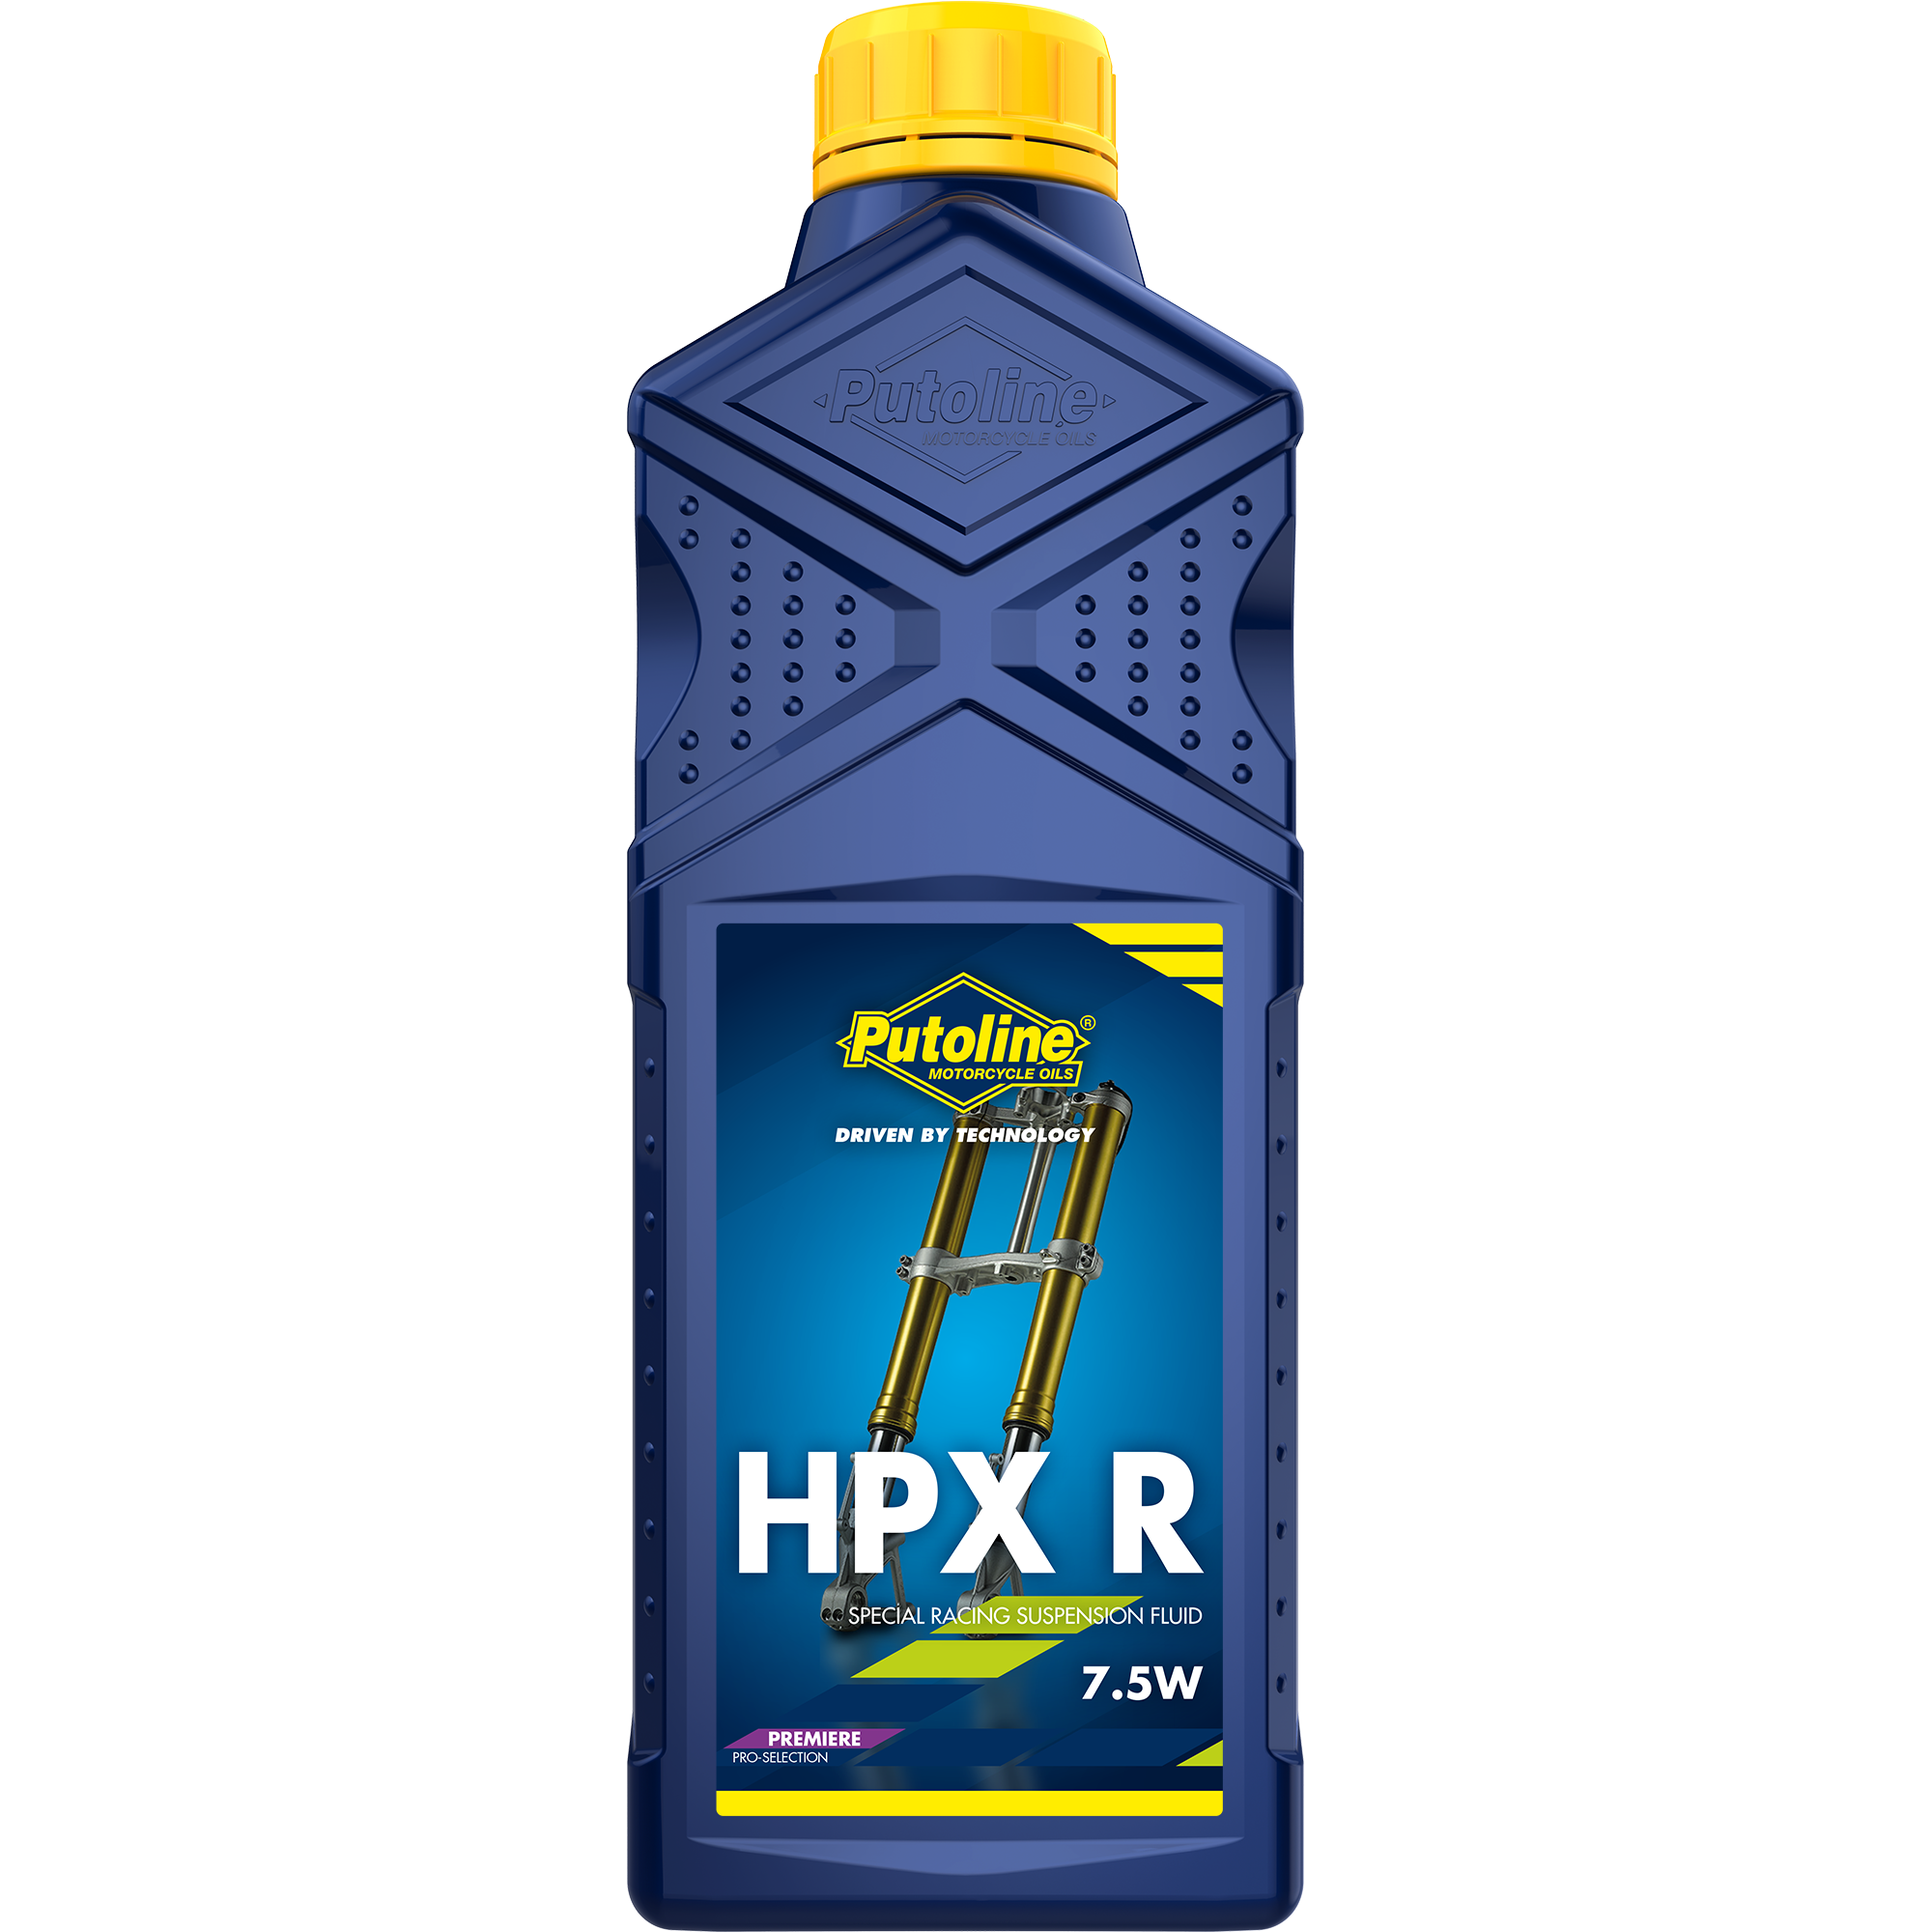 Putoline HPX R 7.5W, 1 lt